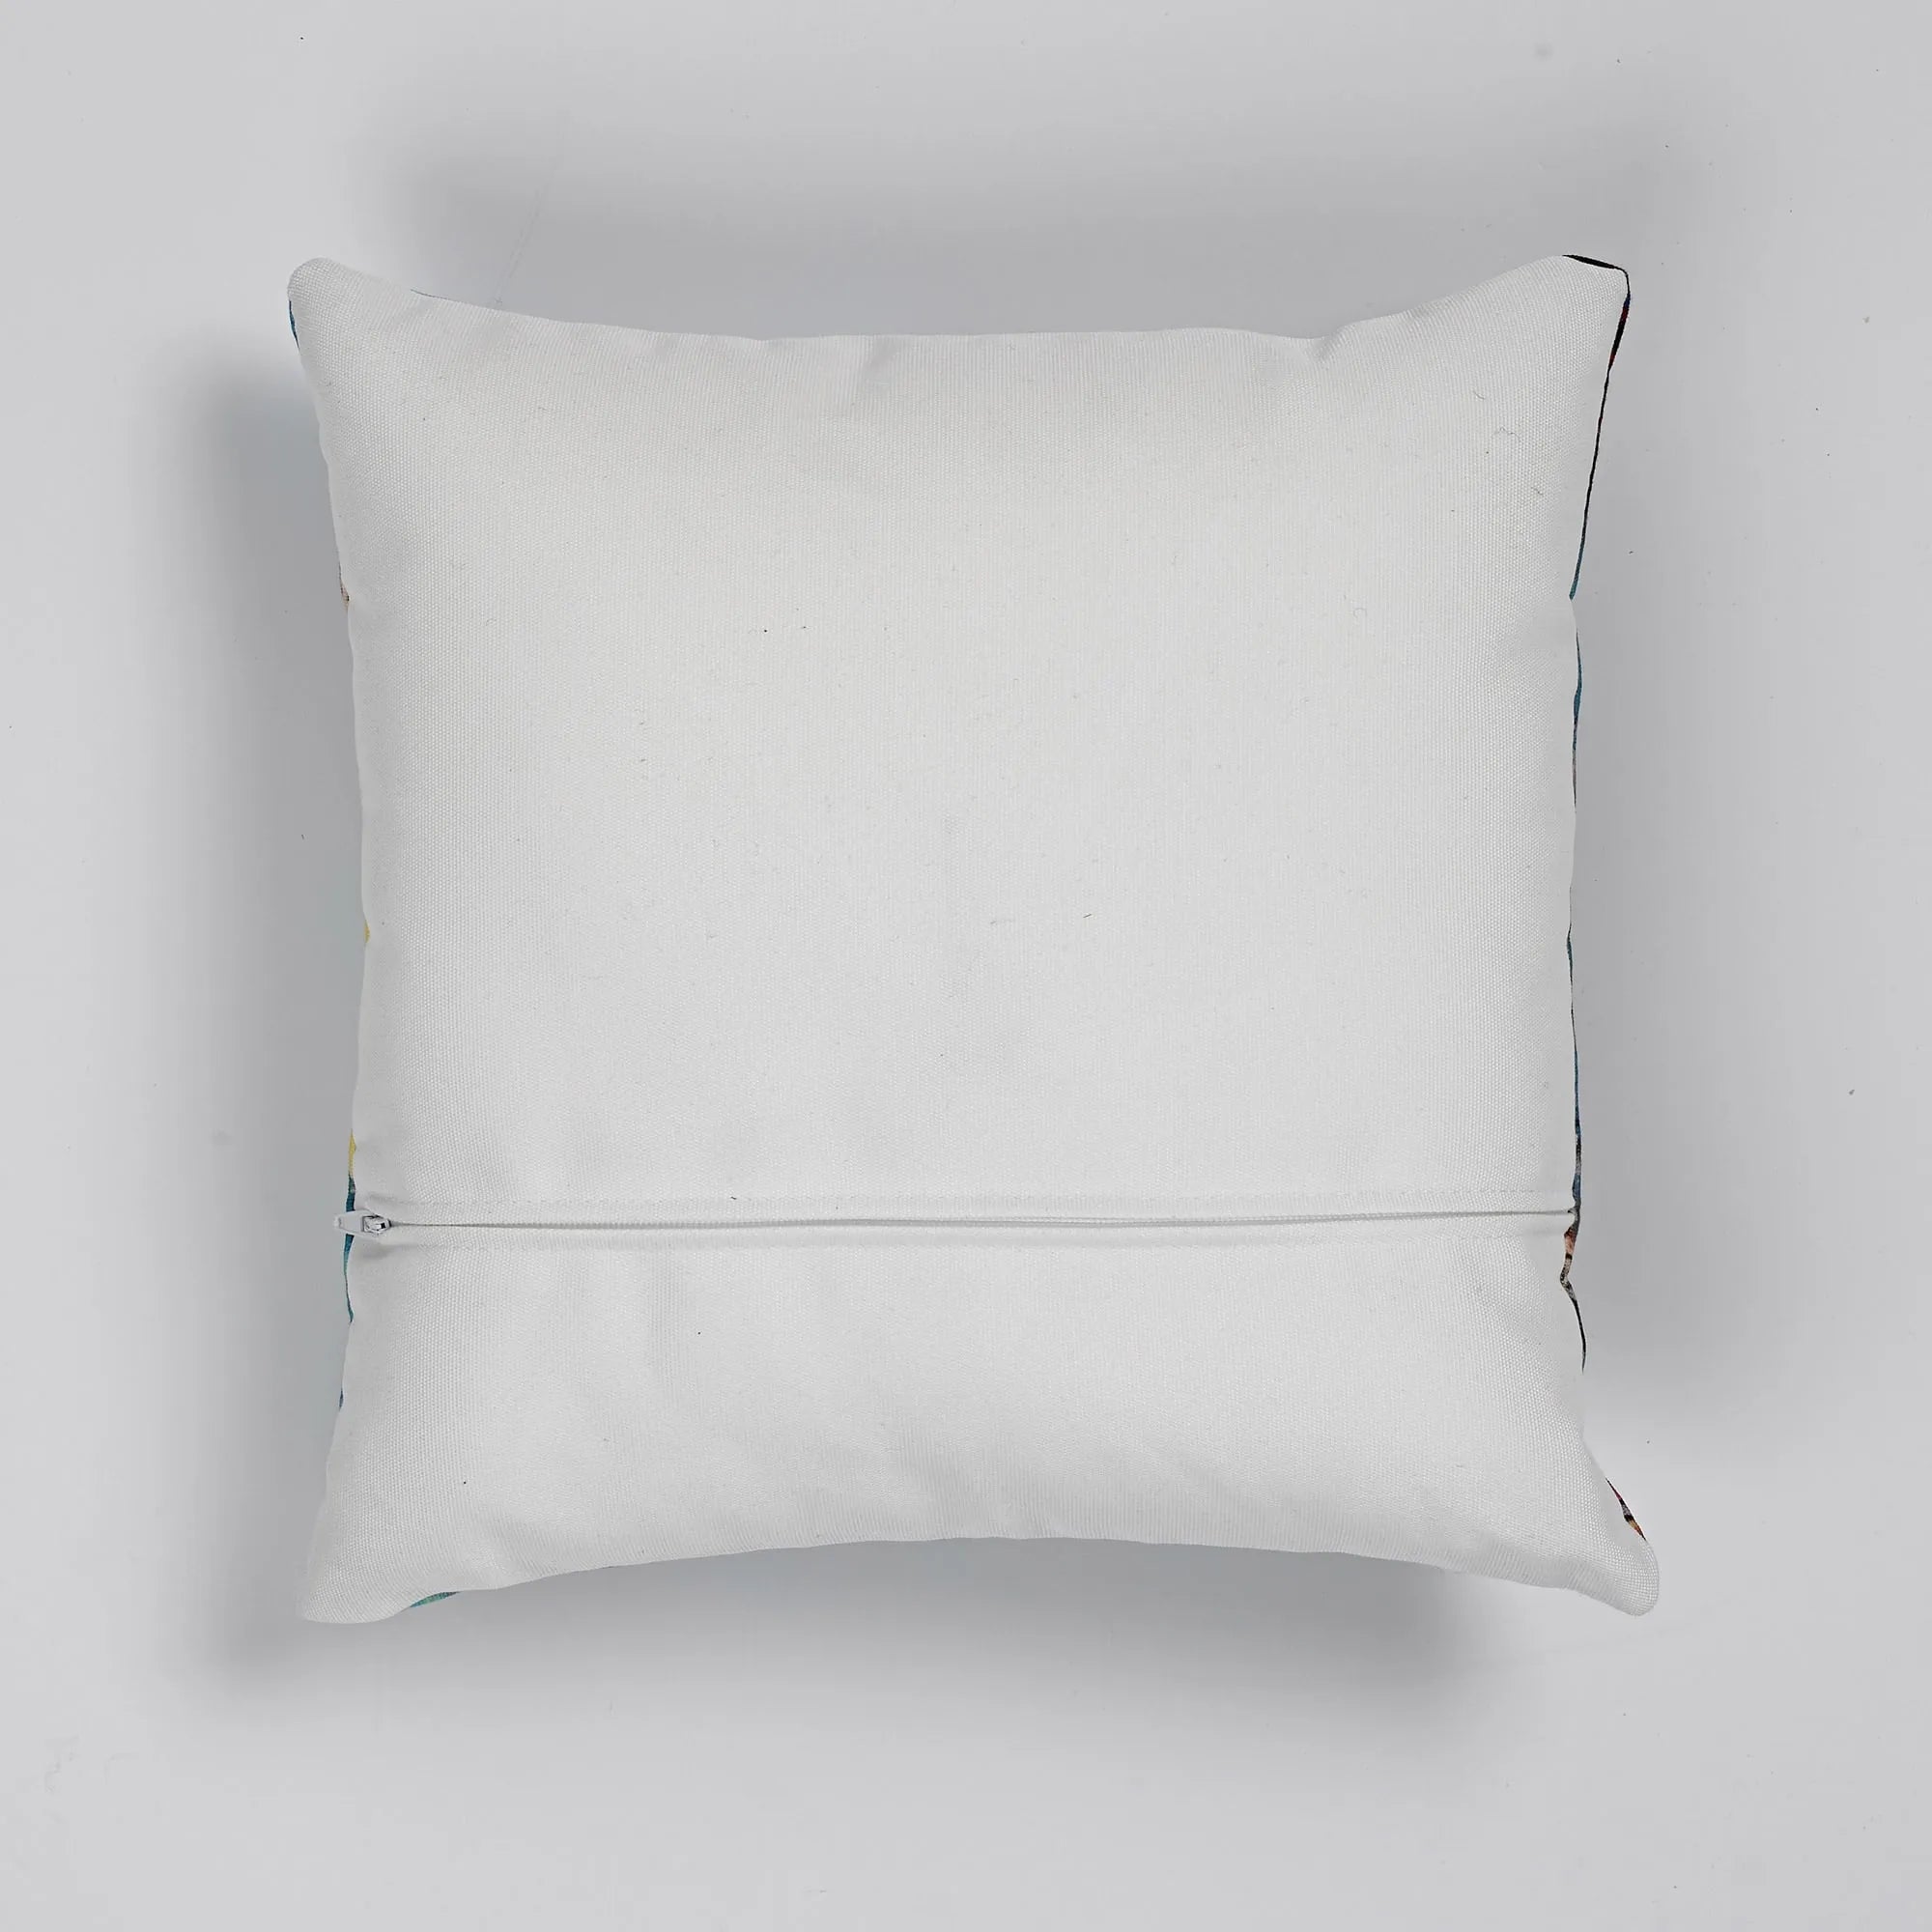 Four Fruits - William Morris Cushion - Decorative Throw Pillow - Throw Pillows - Aesthetic Art